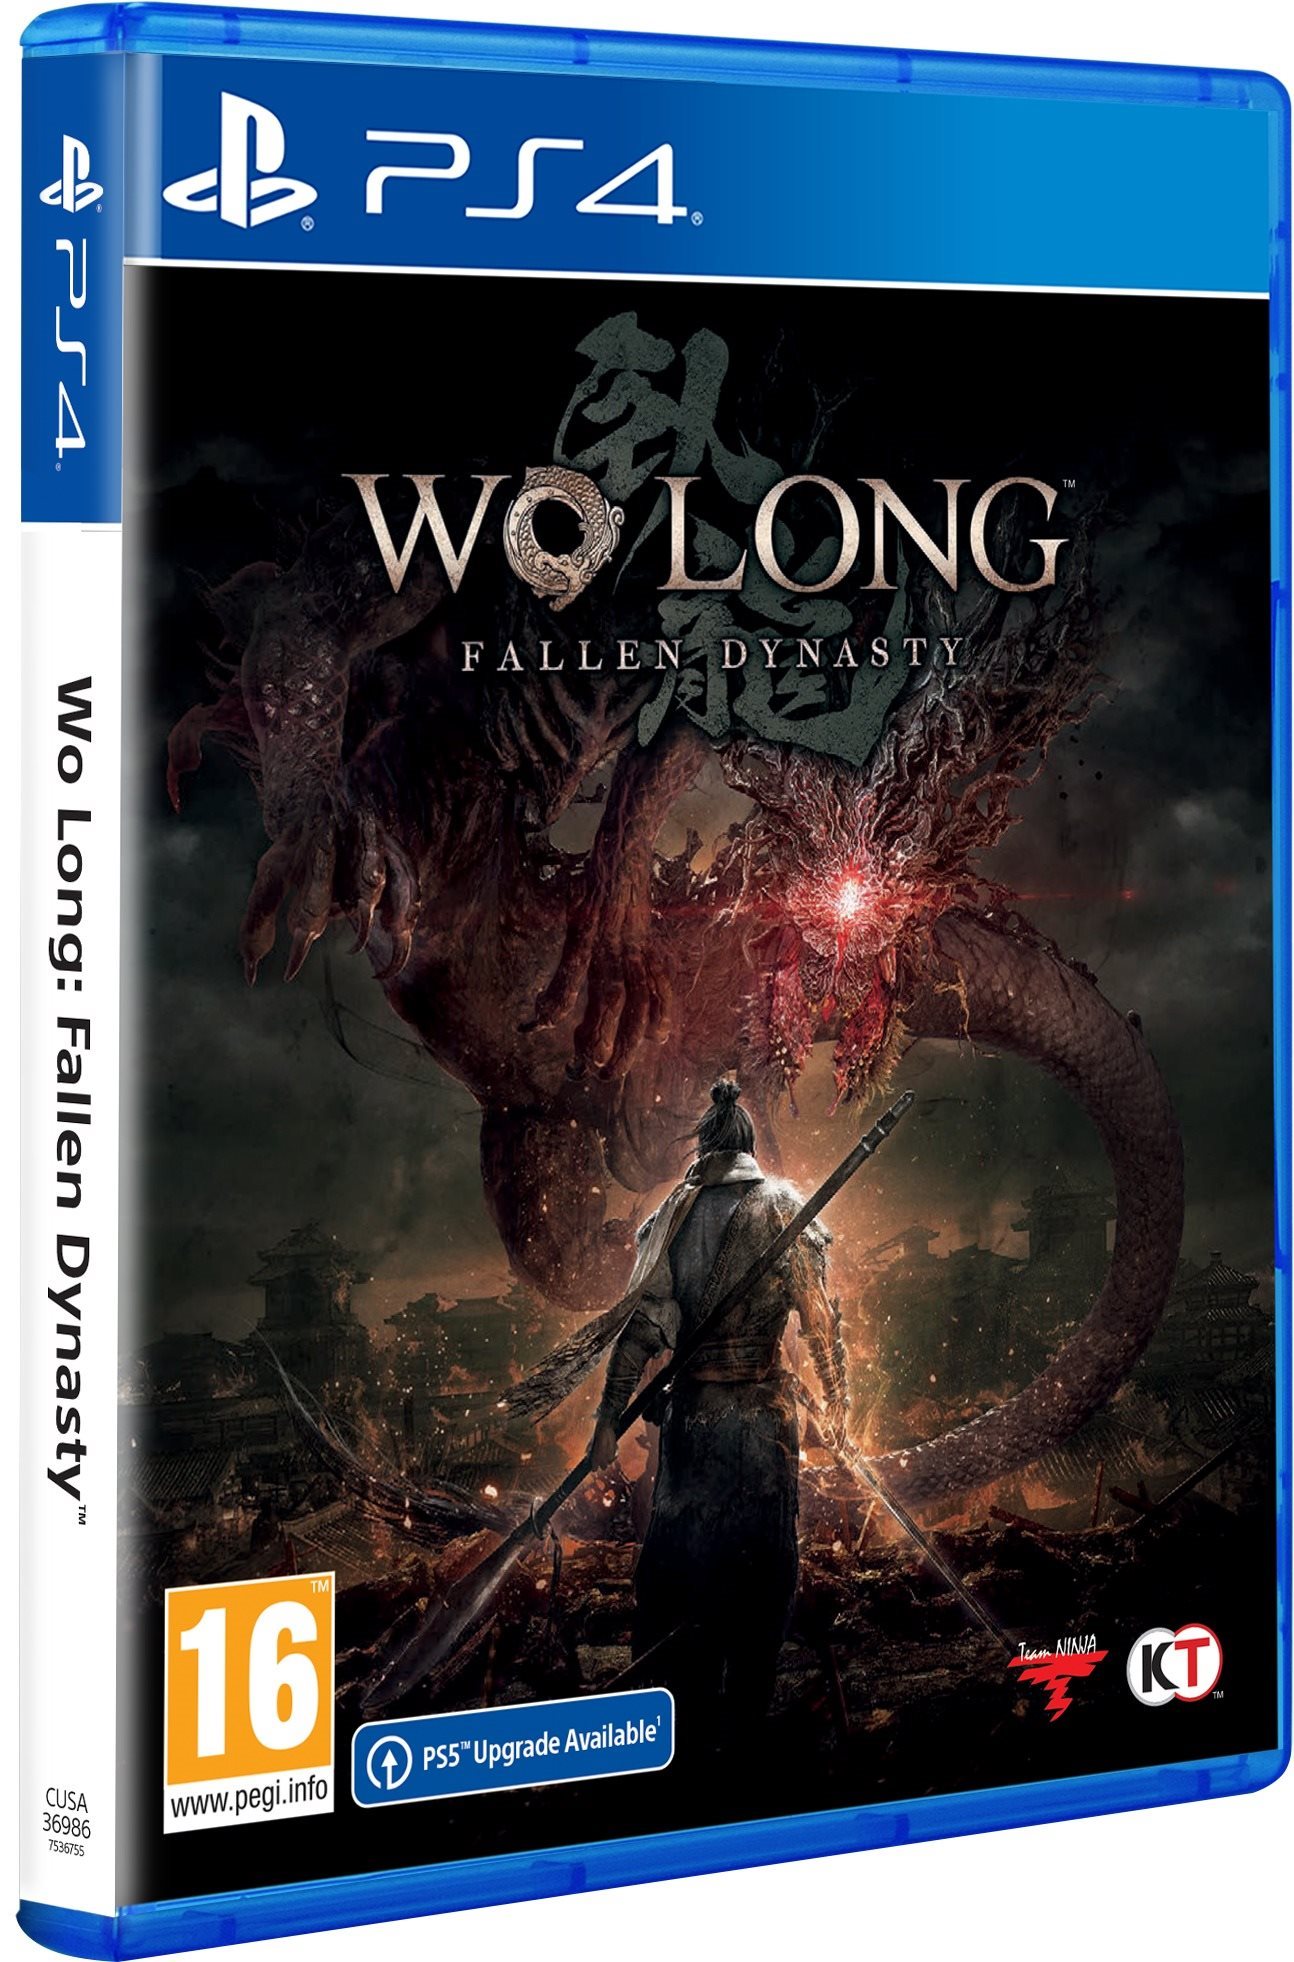 PS4 játék Wo Long: Fallen Dynasty Steelbook kiadás